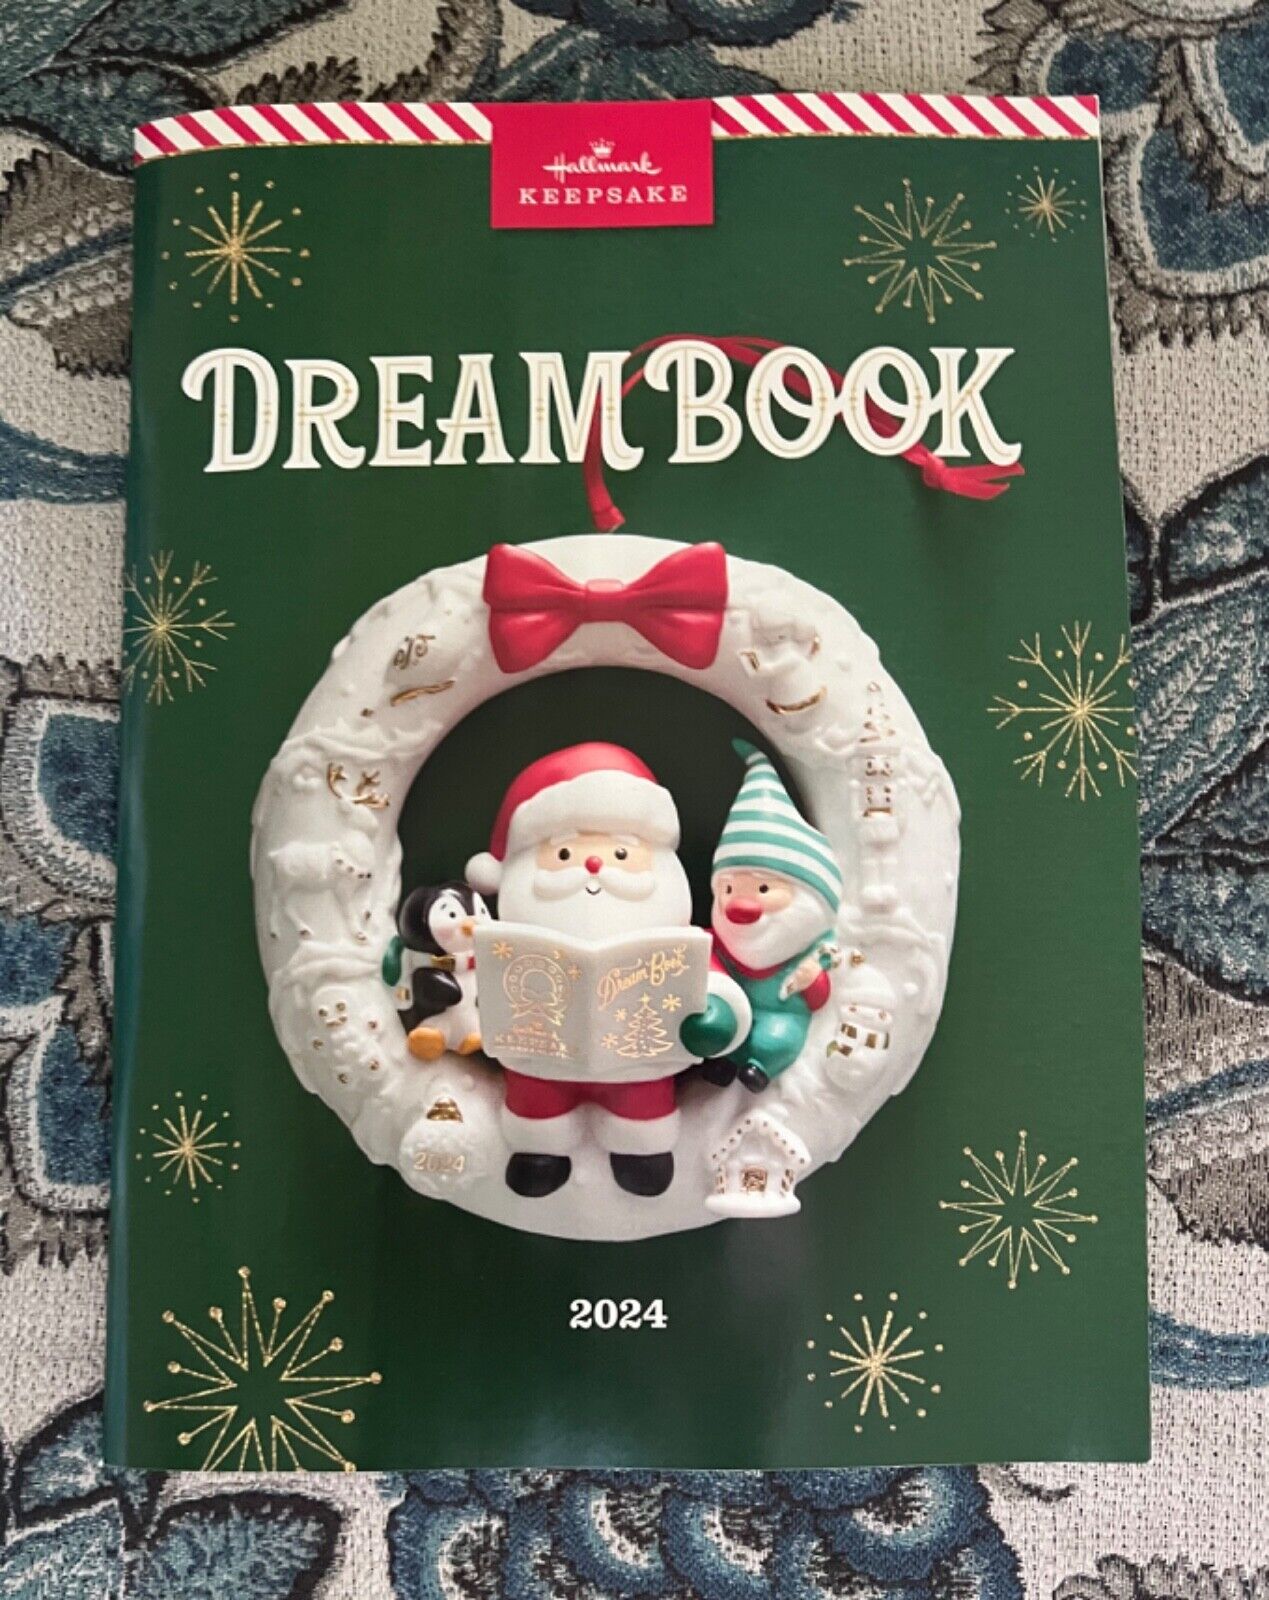 Hallmark Keepsake Dreambook 2024 New